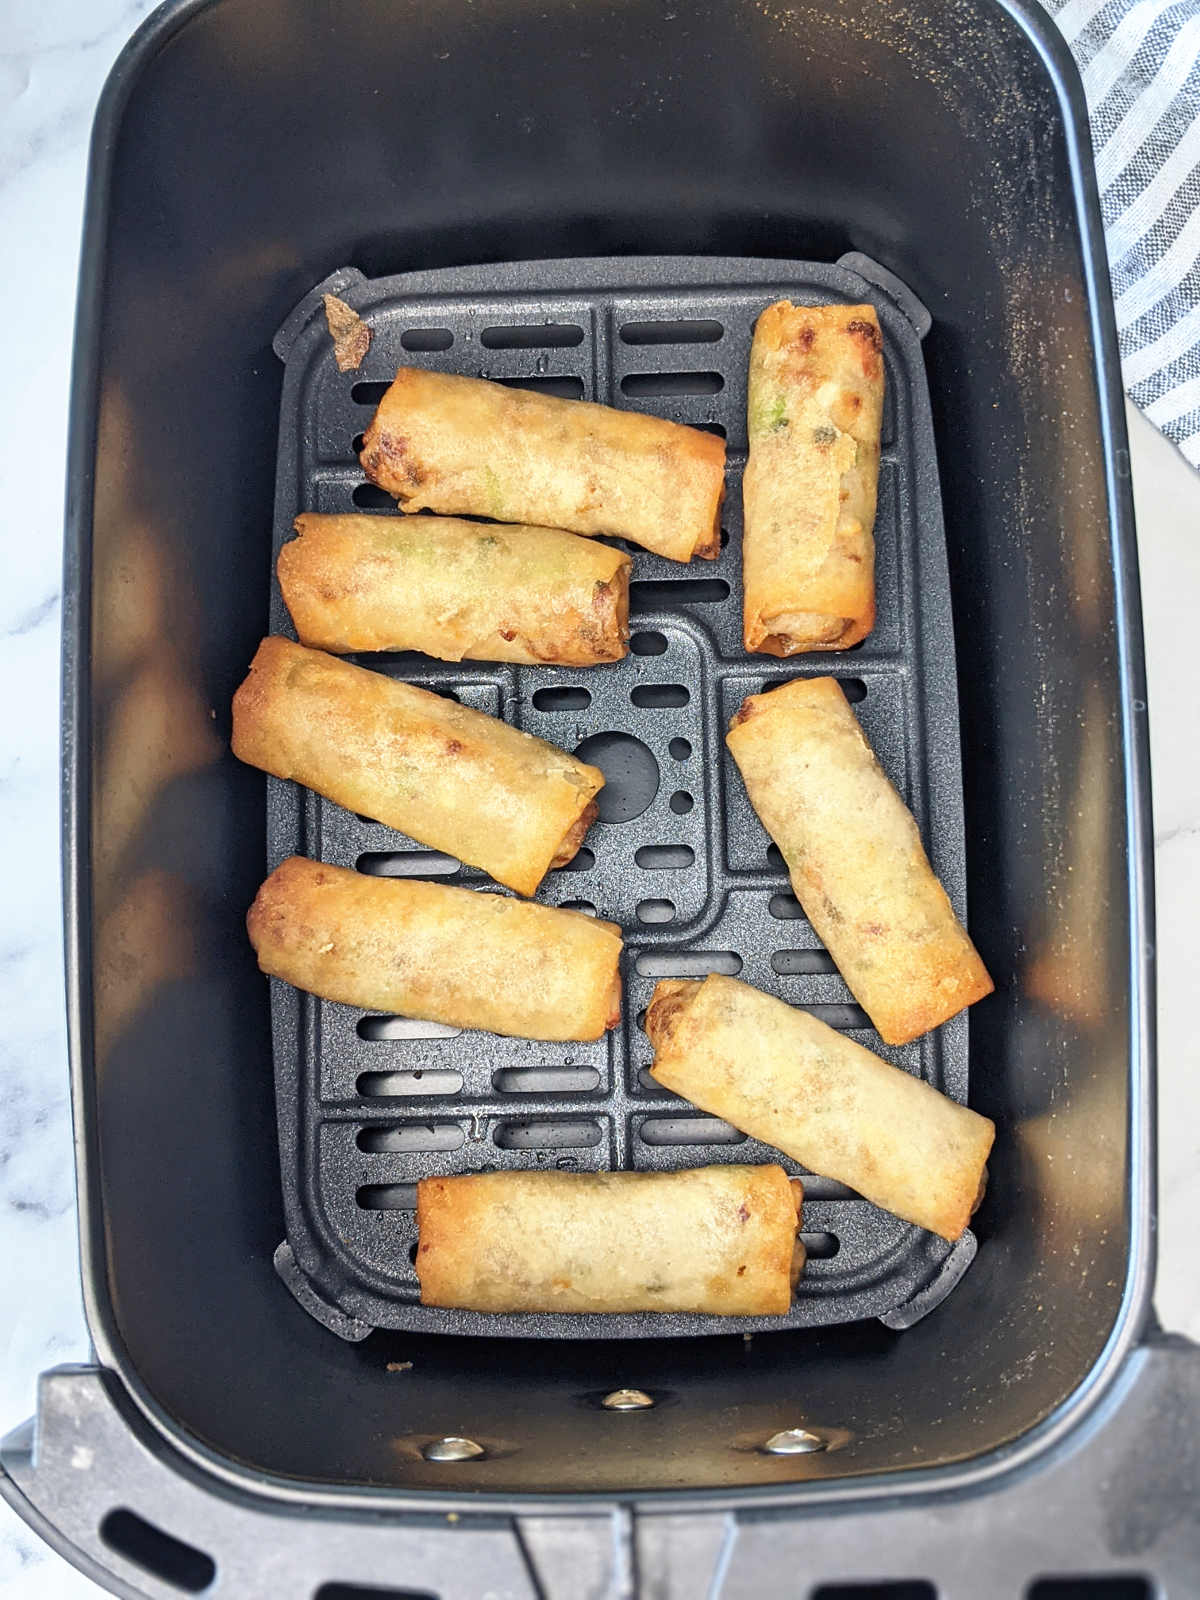 Frozen spring rolls in air fryer basket after cooking.